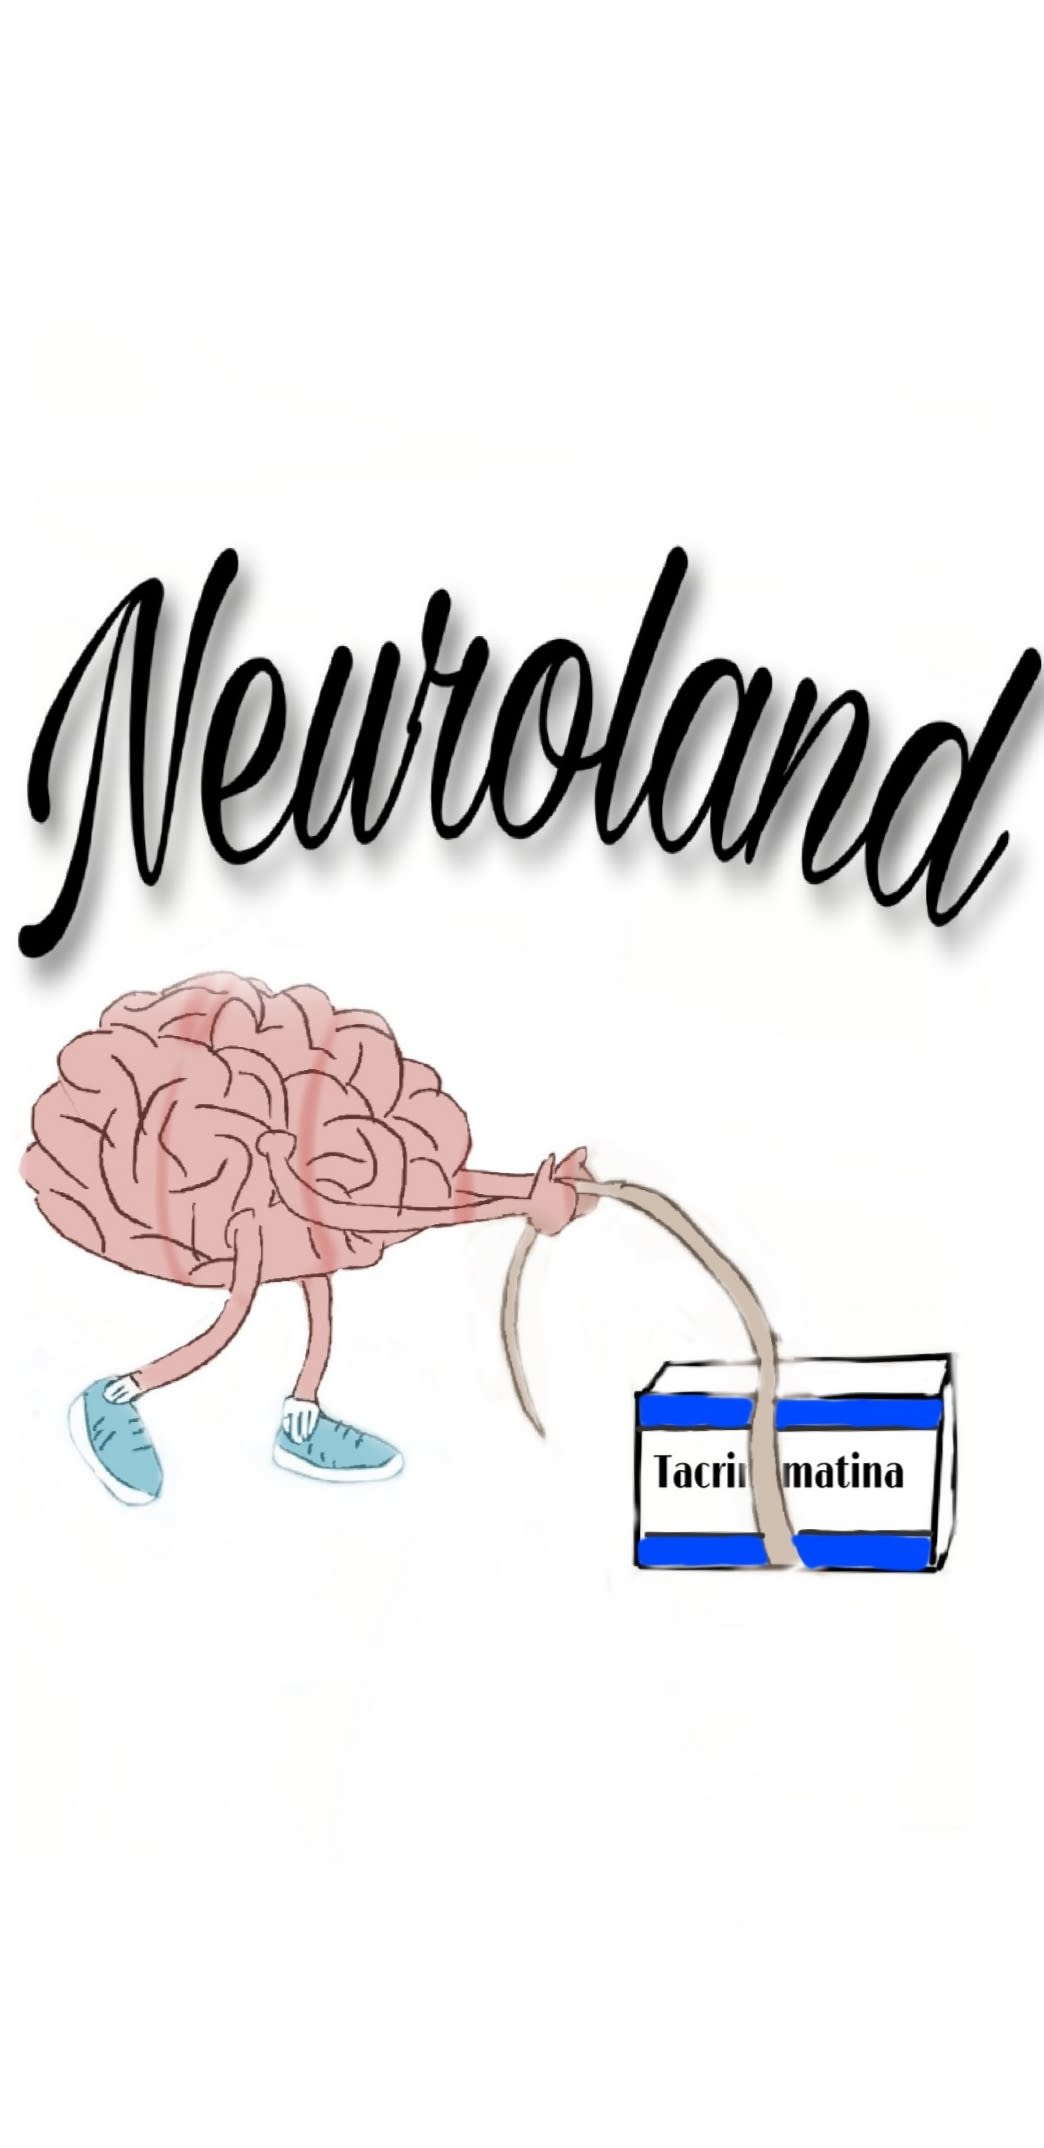 Neuroland